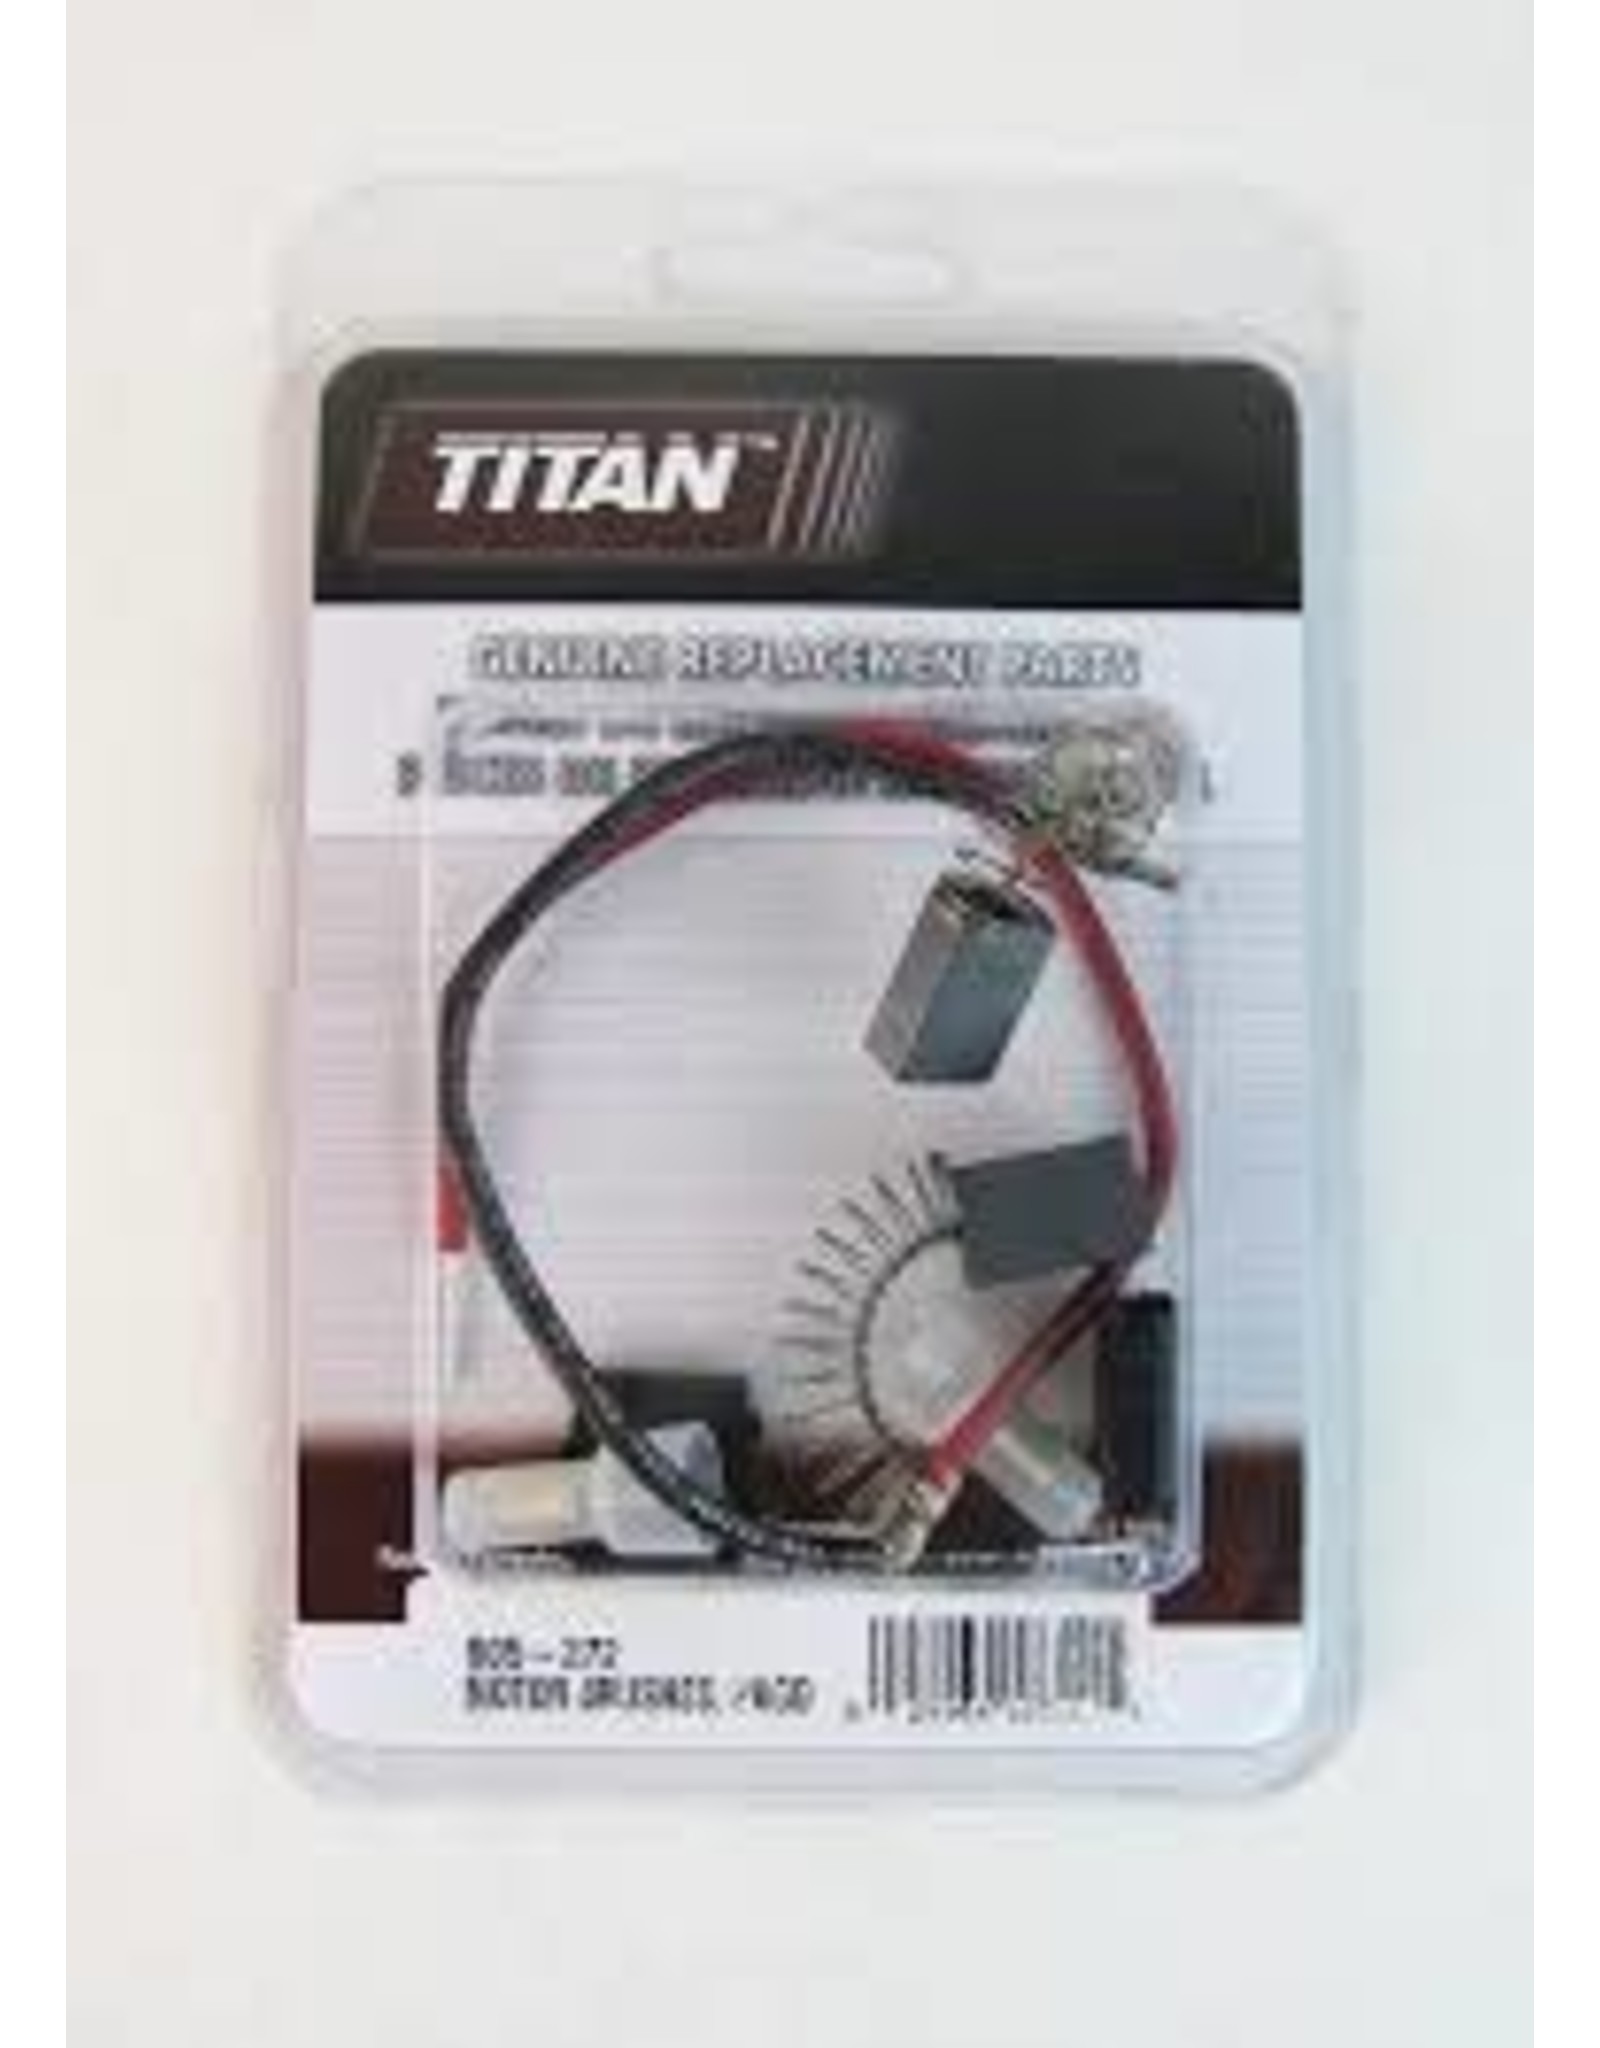 Titan 805-272 Motor Brush Kit